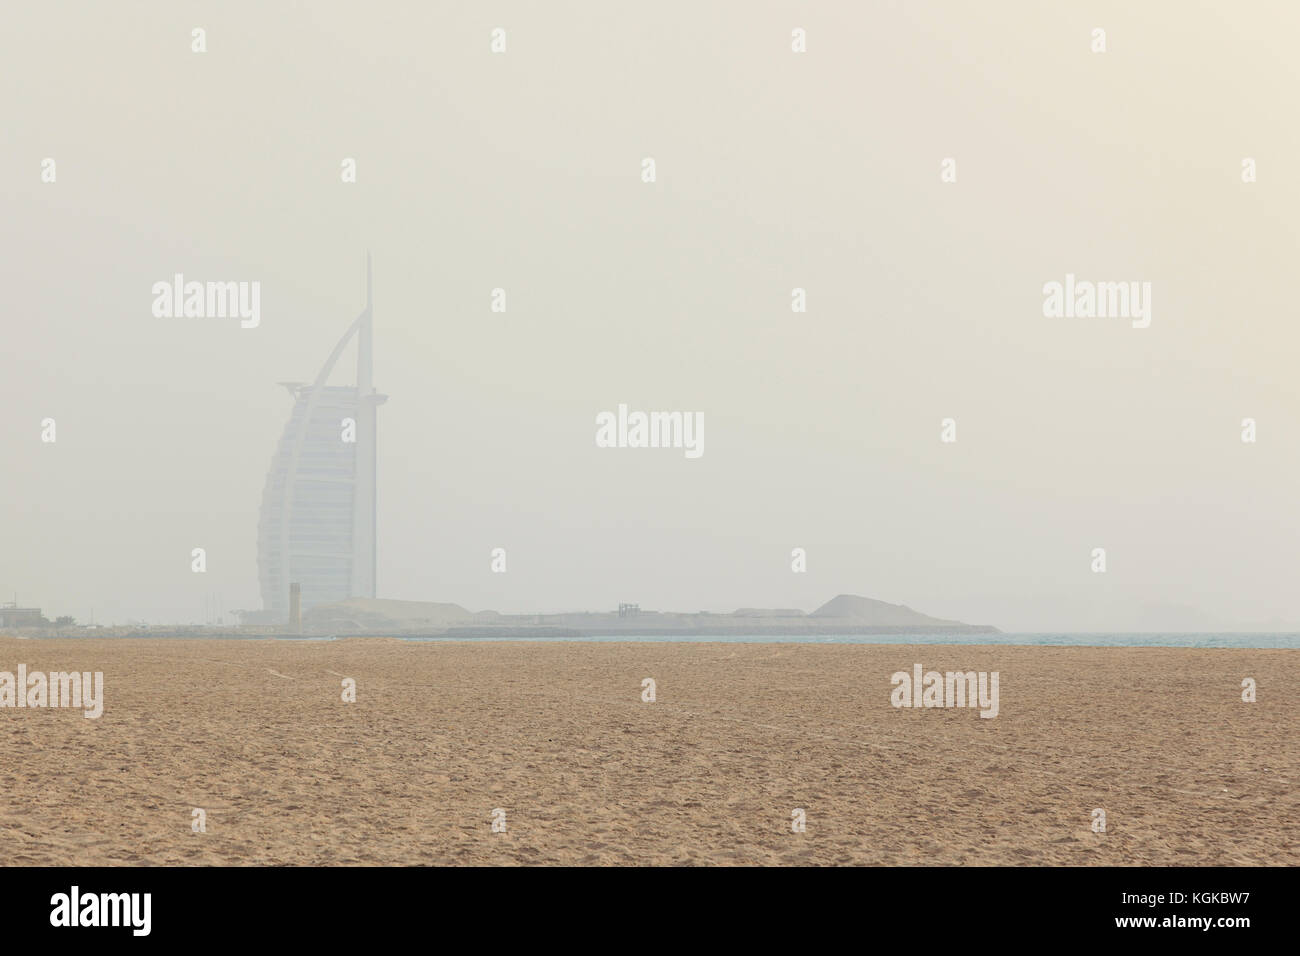 Sandsturm in Dubai, Burj al Arab aus einem nahe gelegenen Strand Blick Stockfoto